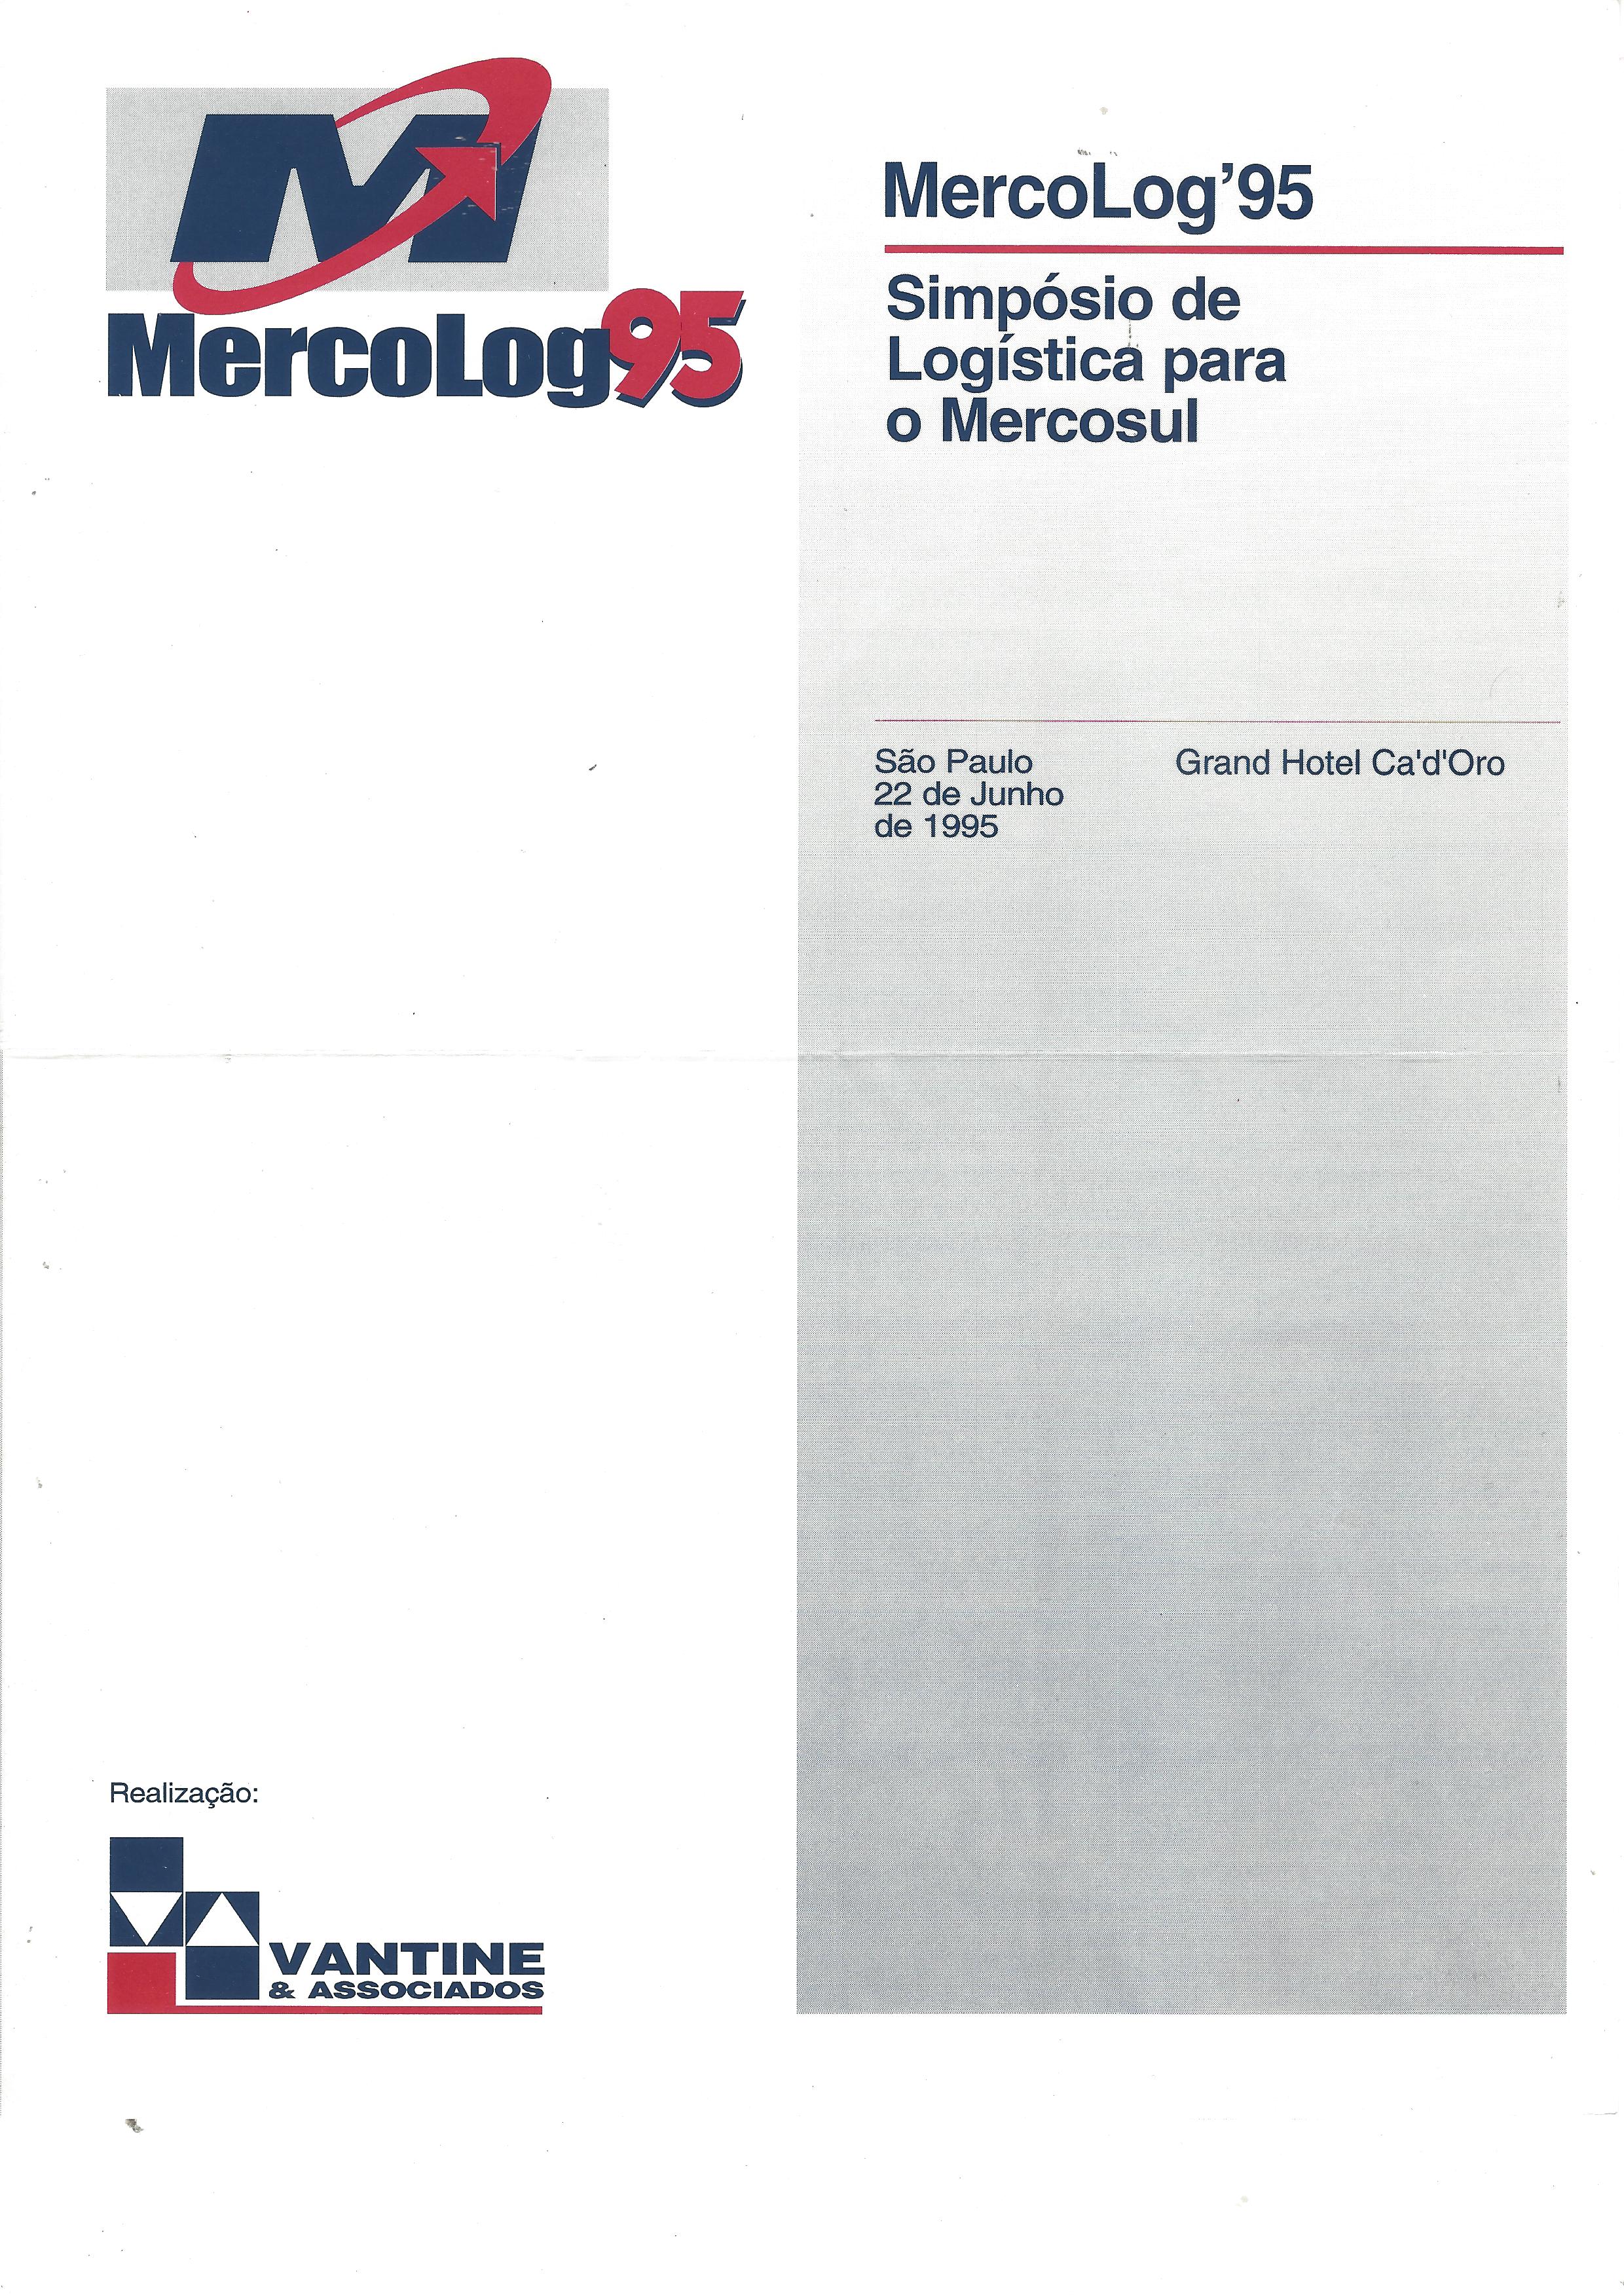 MERCOLOG 95 – Simpósio de logística para o Mercosul